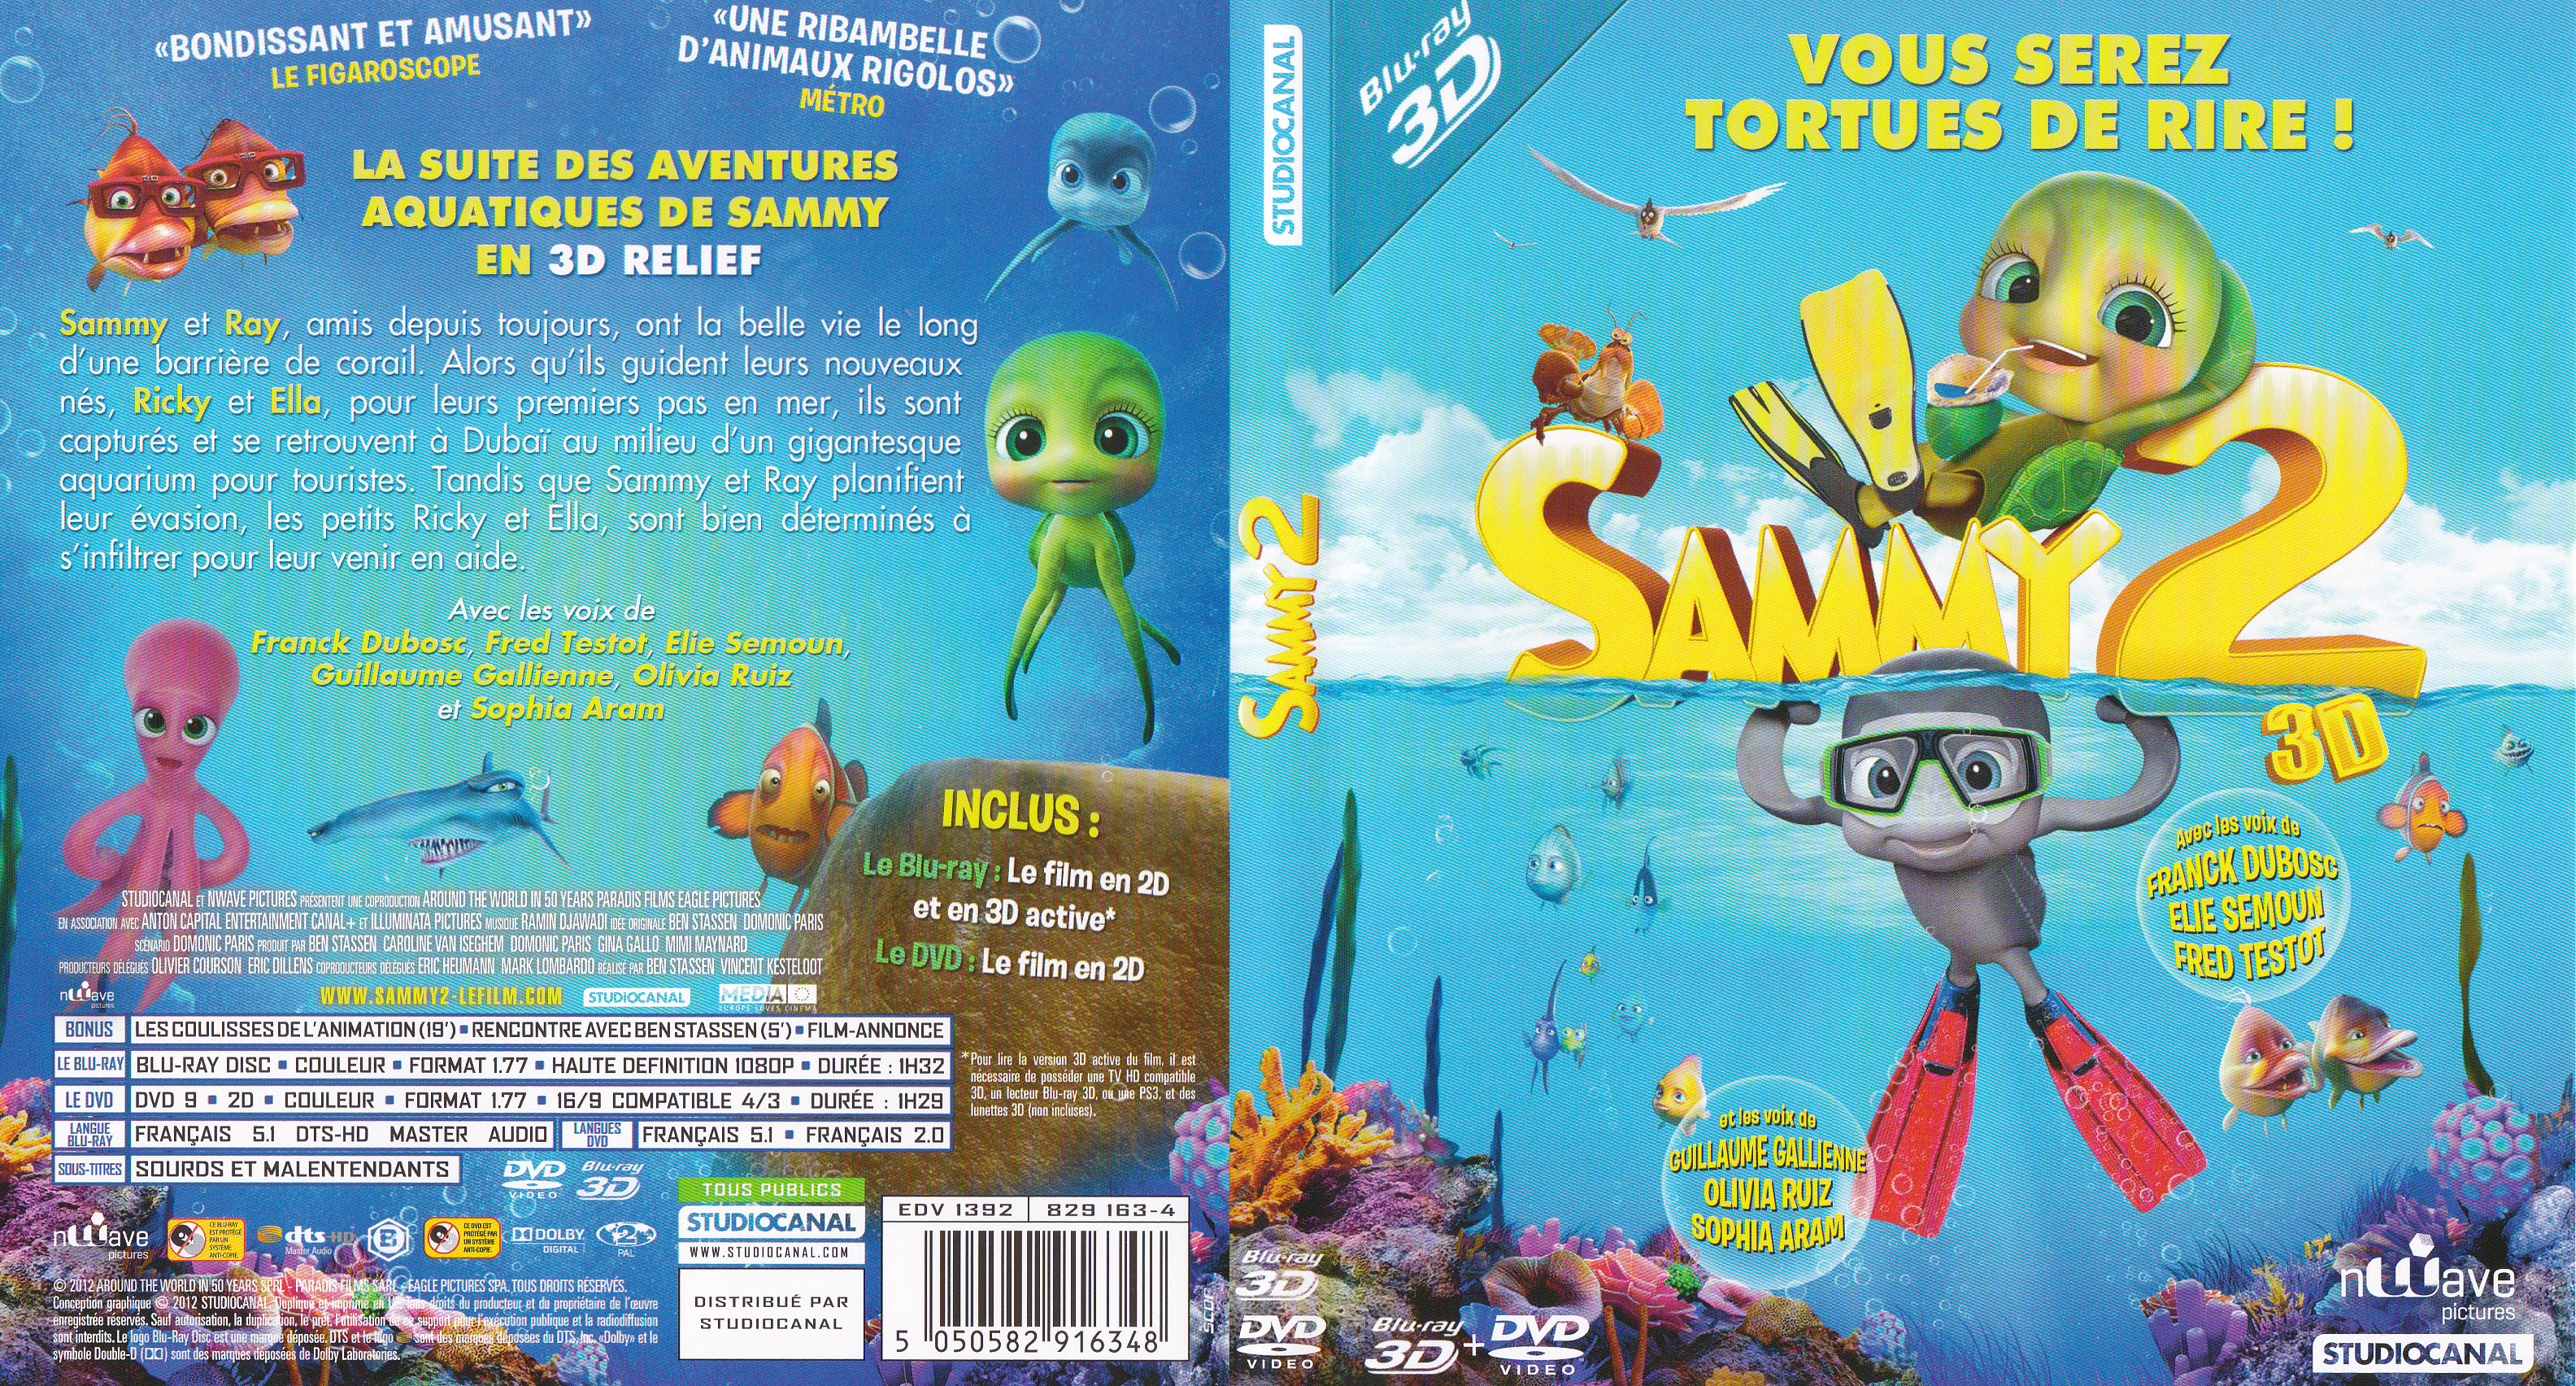 Jaquette DVD Sammy 2 (BLU-RAY)